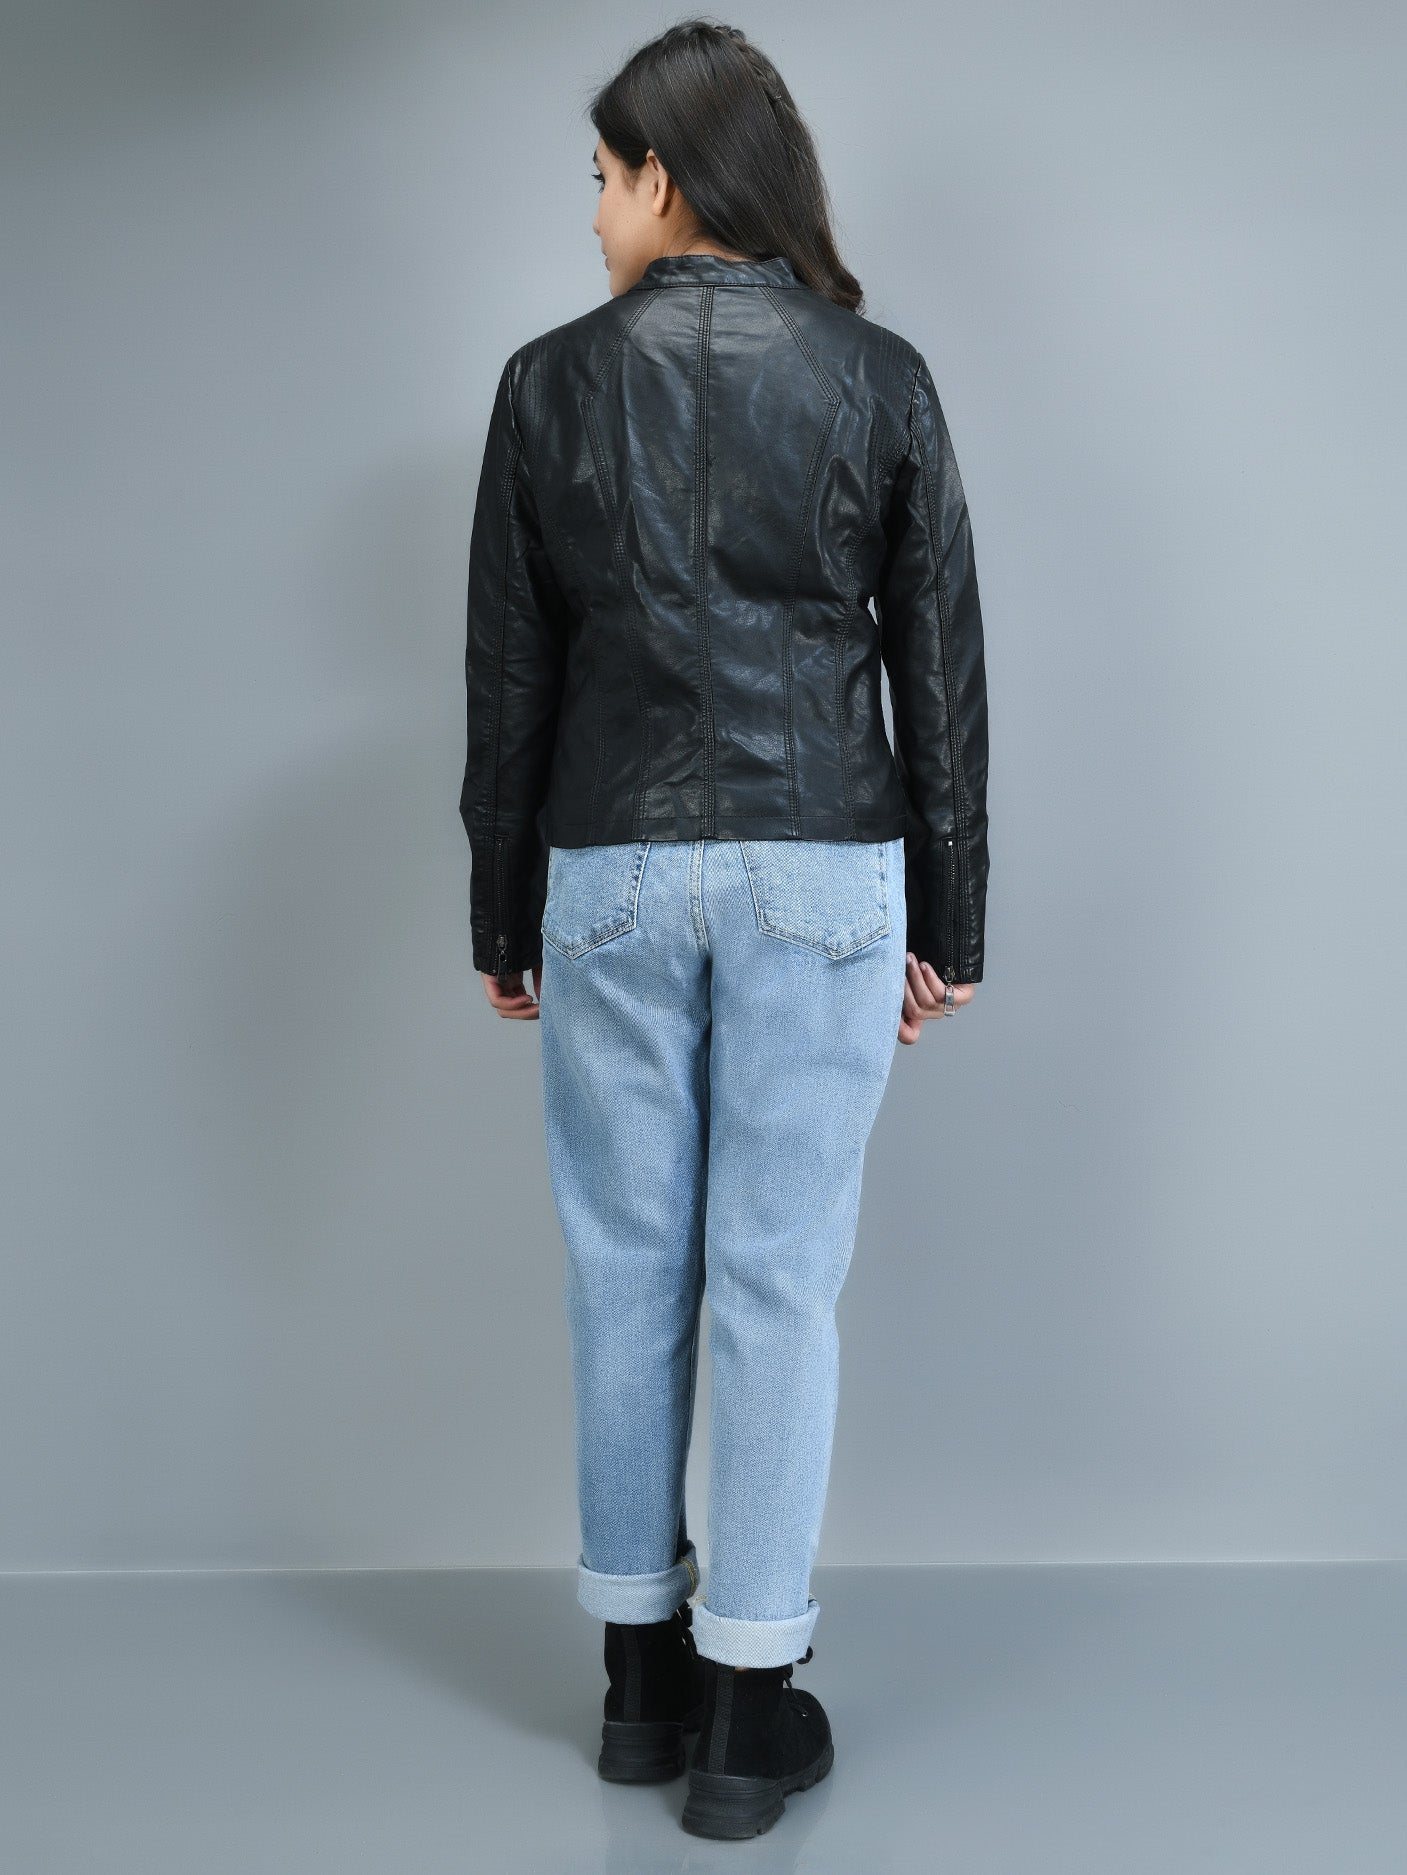 Classic Leather Jacket - Black